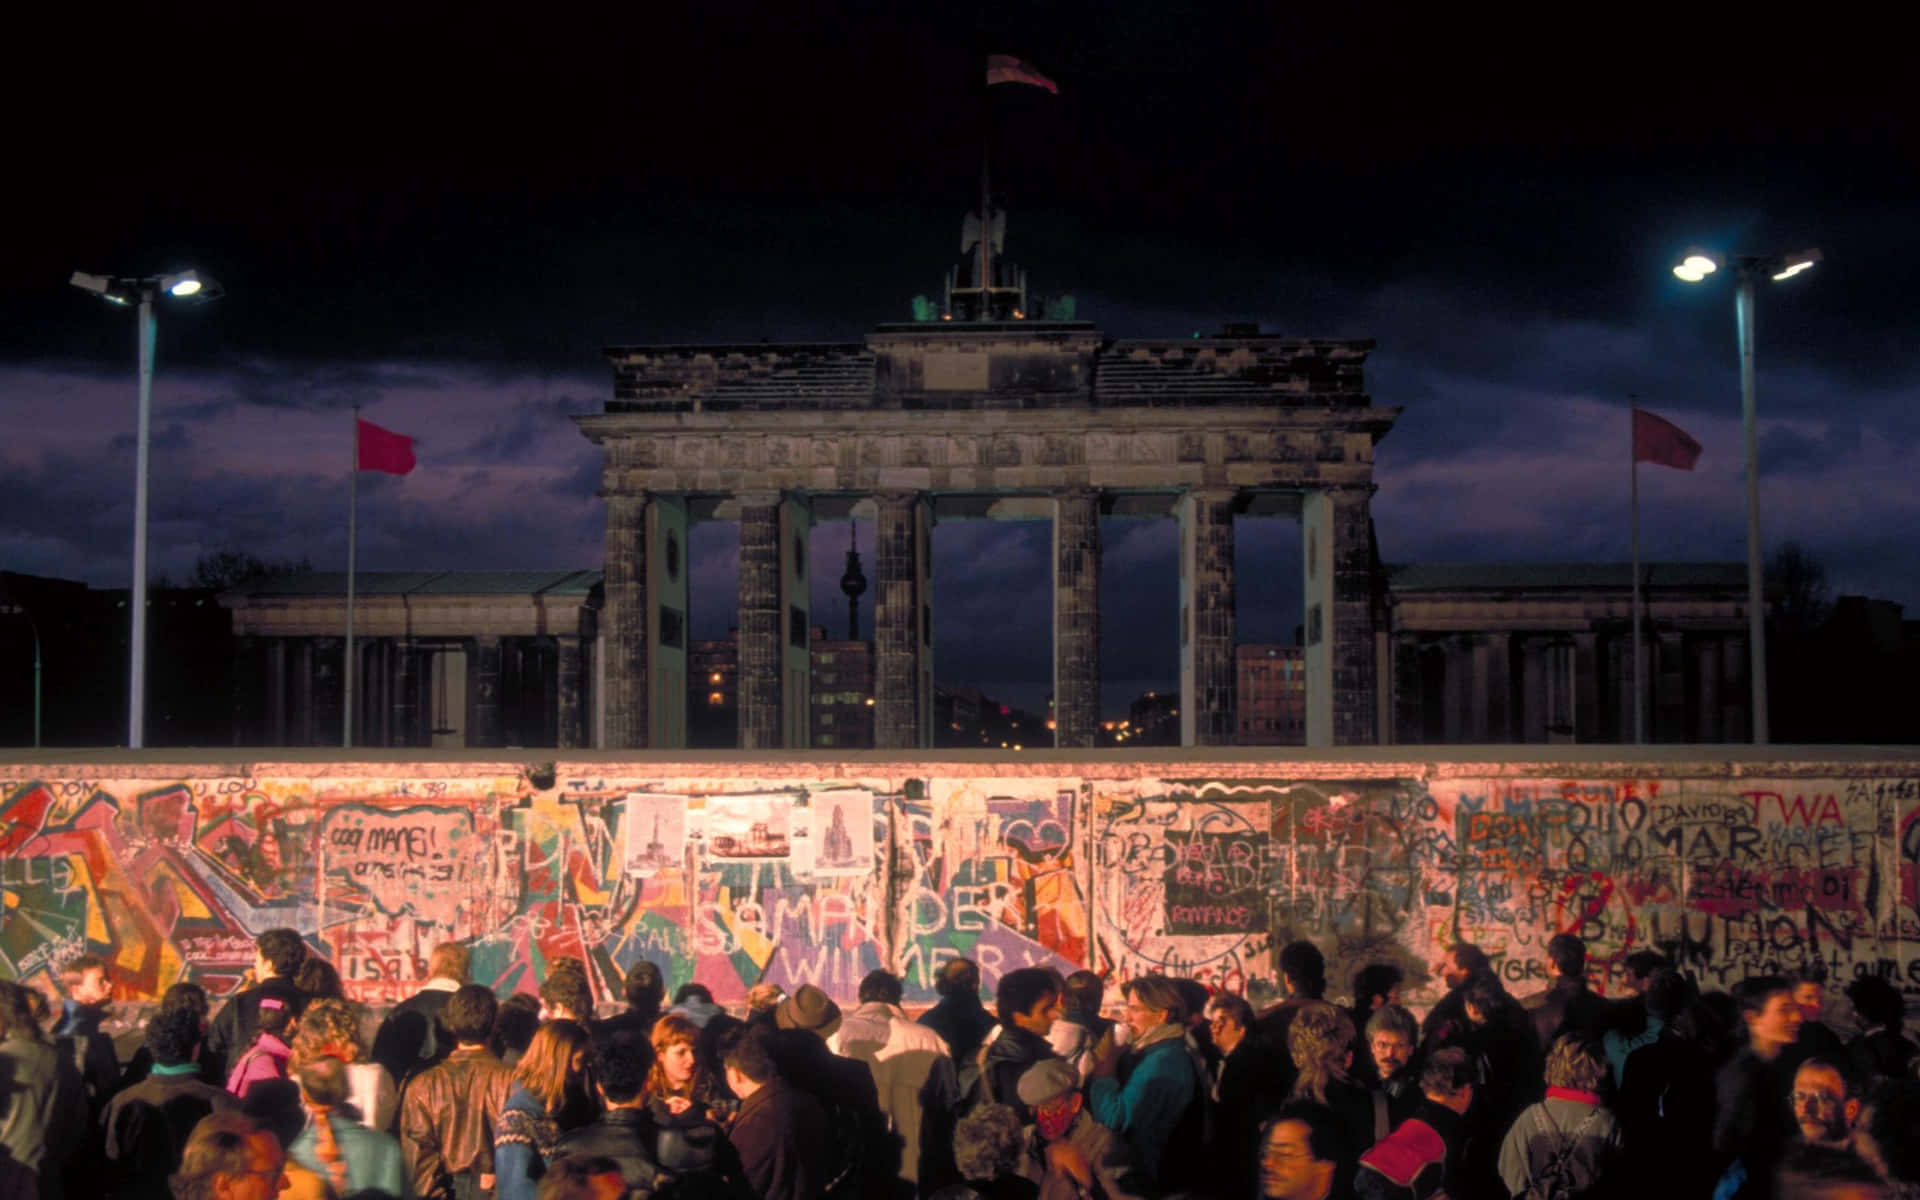 Falletav Berlinmuren År 1989. Wallpaper